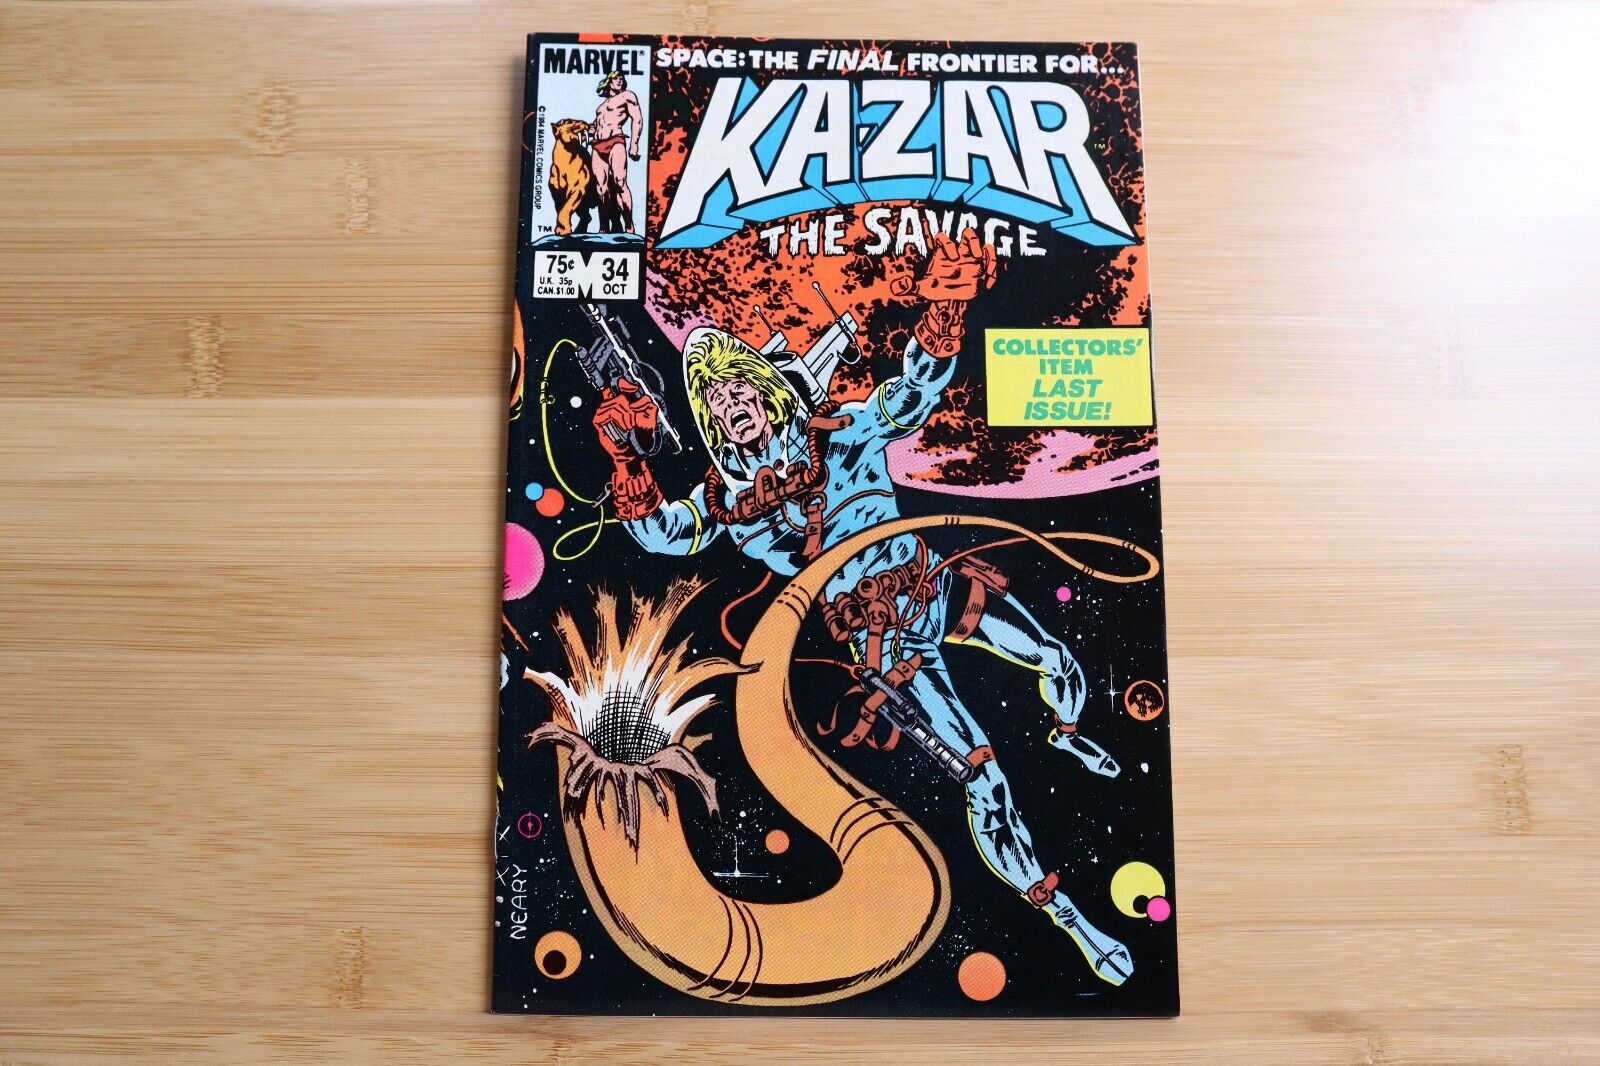 KA-ZAR The Savage #34 Collectors' Item Last Issue VF - 1984